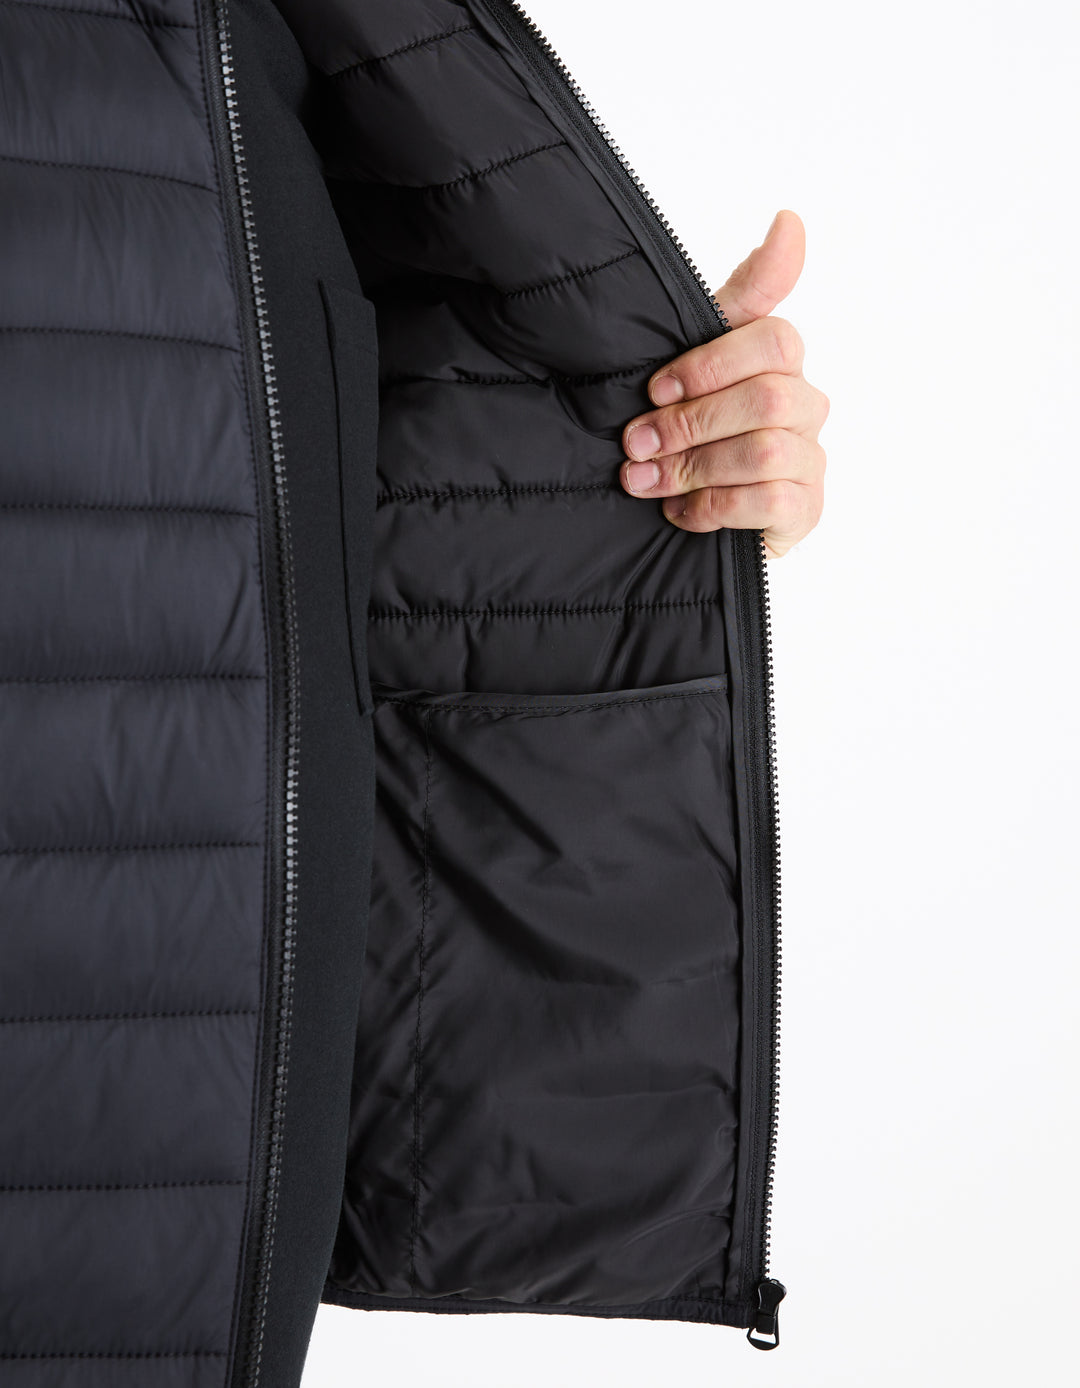 Unisex - Woven - Jacket - no sleeves